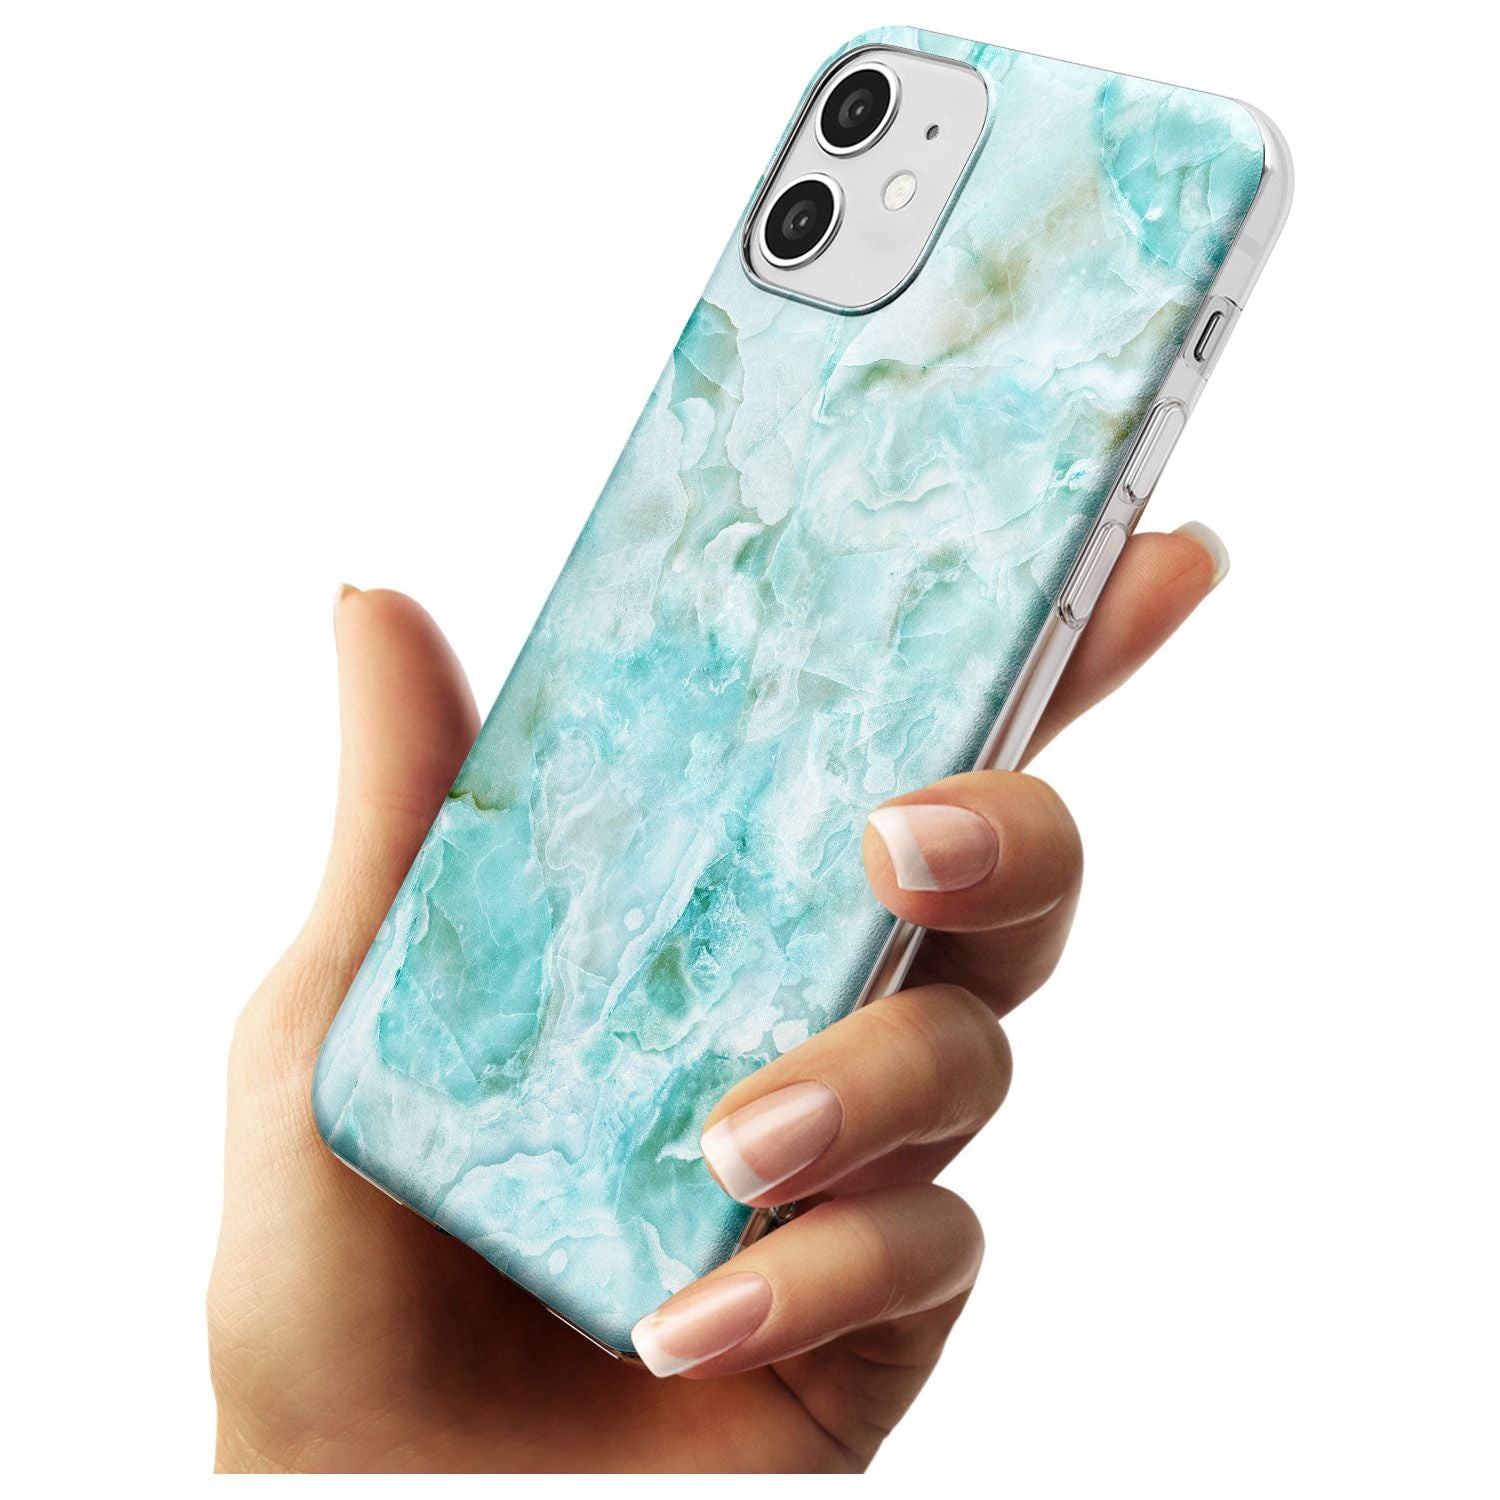 Turquoise Aqua Onyx Marble Black Impact Phone Case for iPhone 11